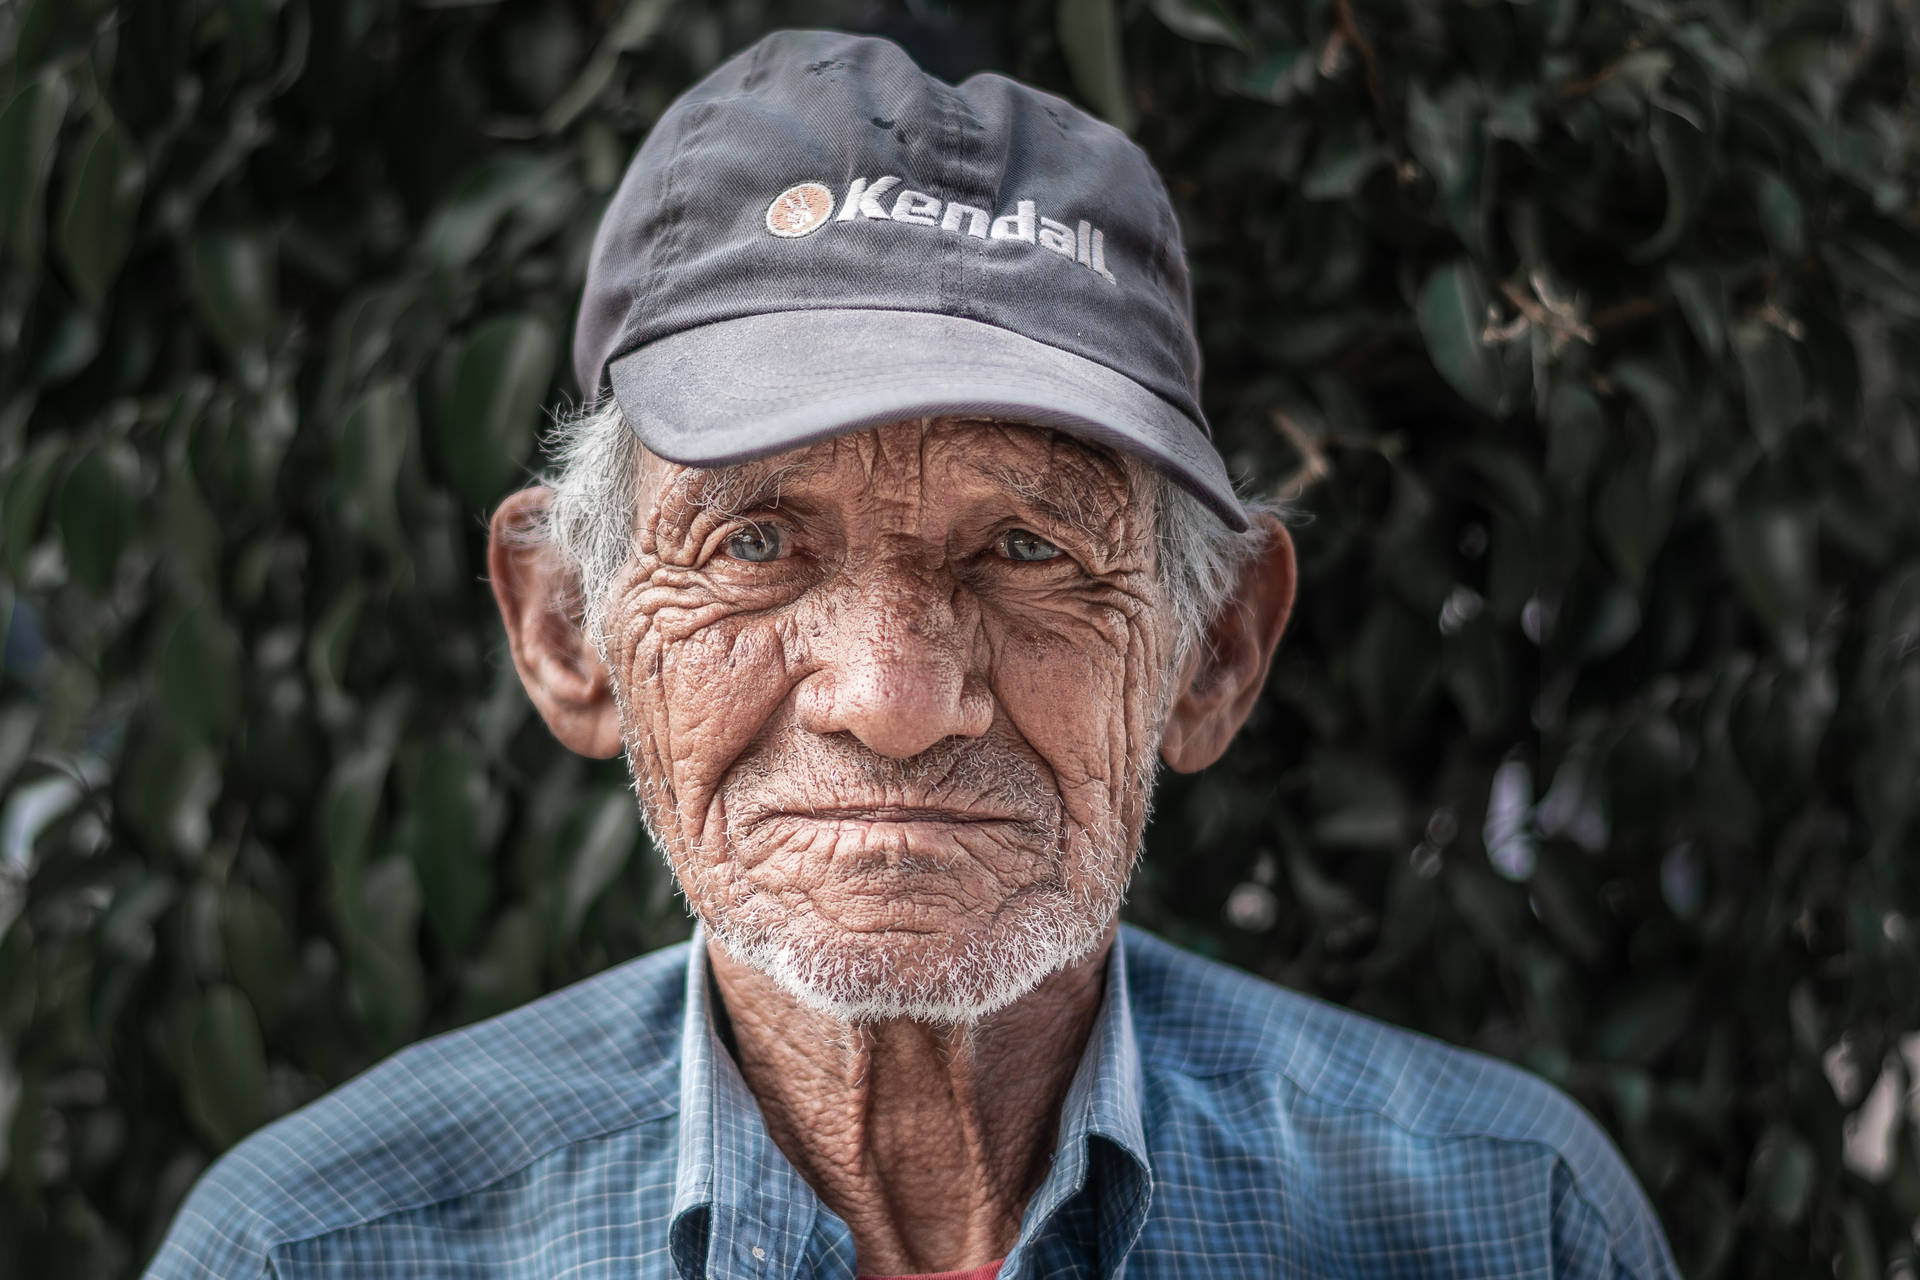 Wise Gaze - An Elderly Man In A Baseball Cap Background